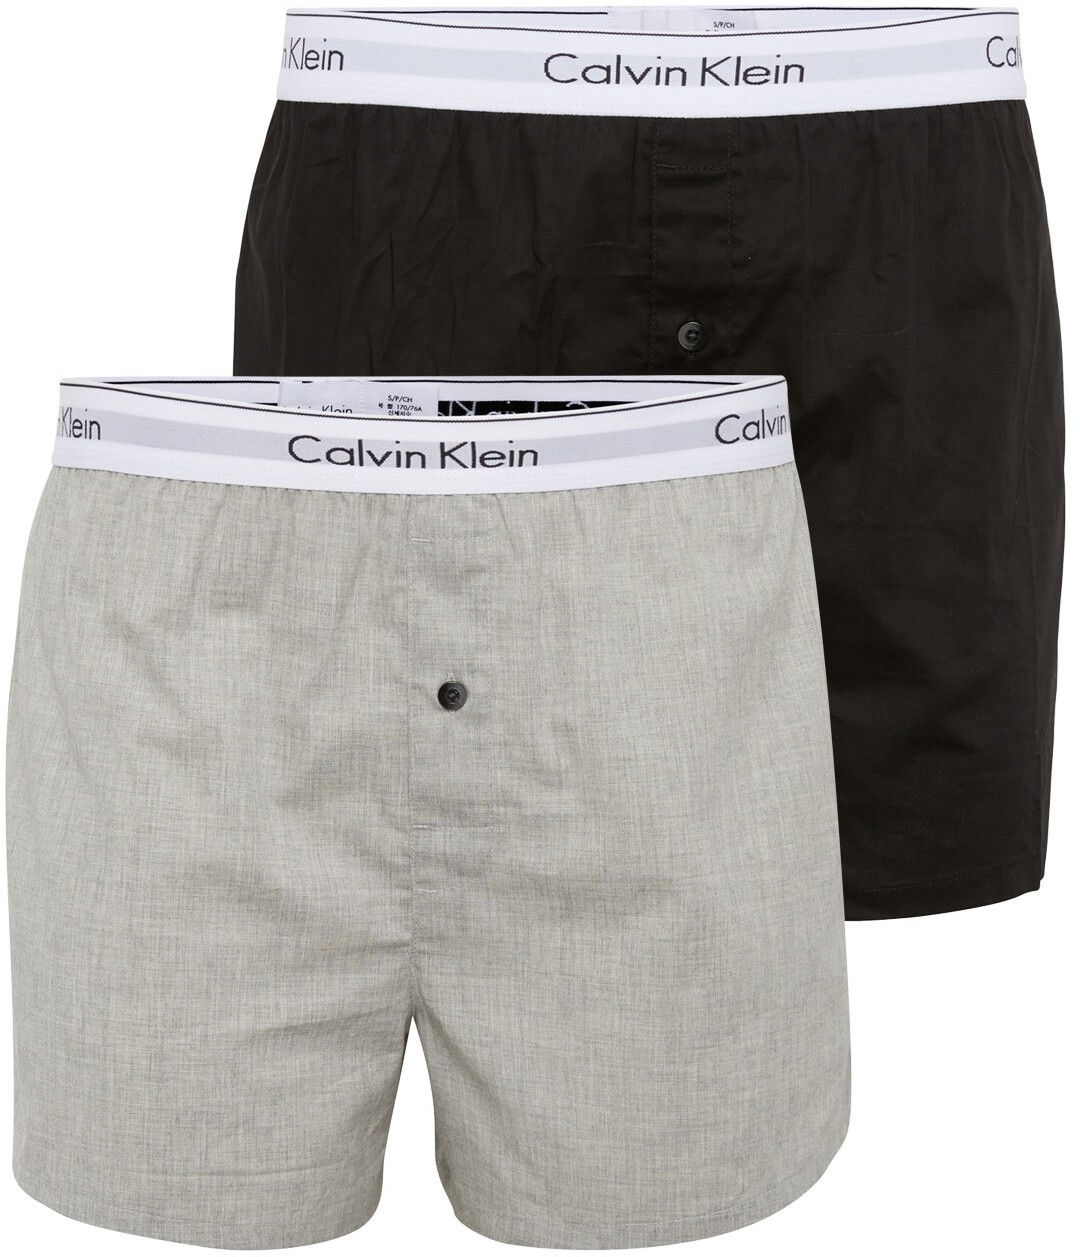 Calvin Klein 2-Pack Slim Fit Boxershorts - Modern Cotton